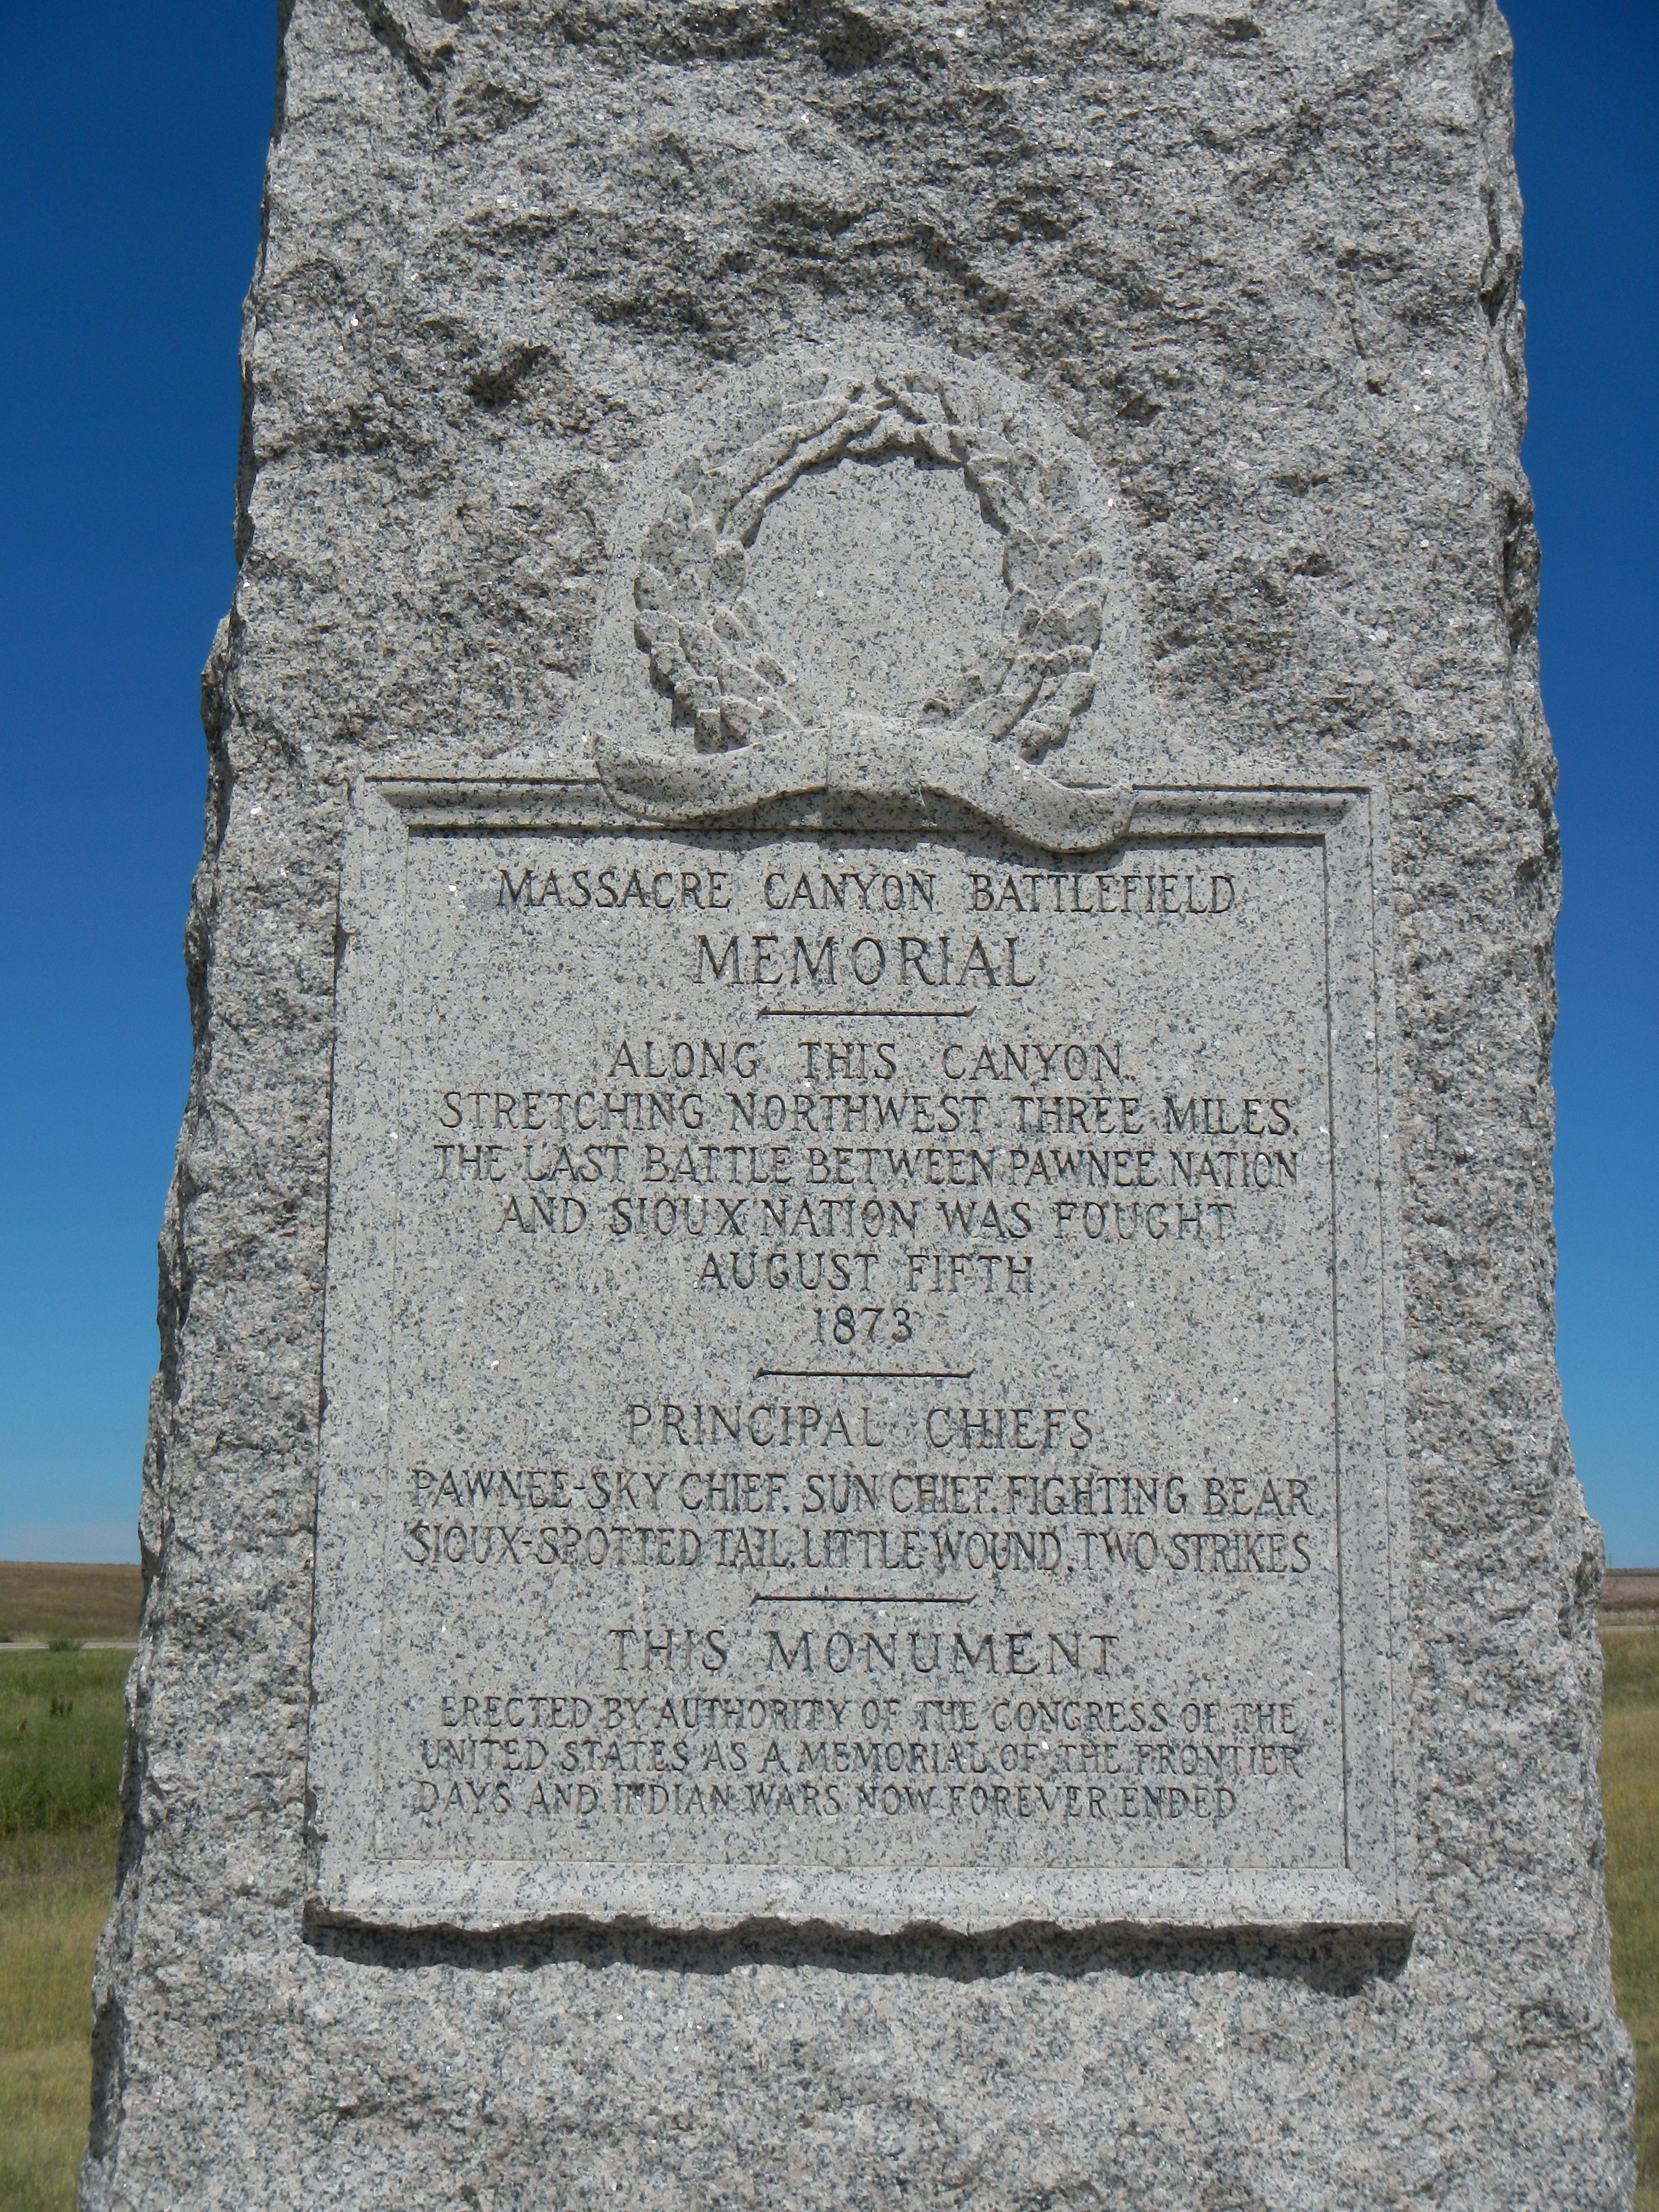 Massacre Canyon Battlefield Memorial inscription